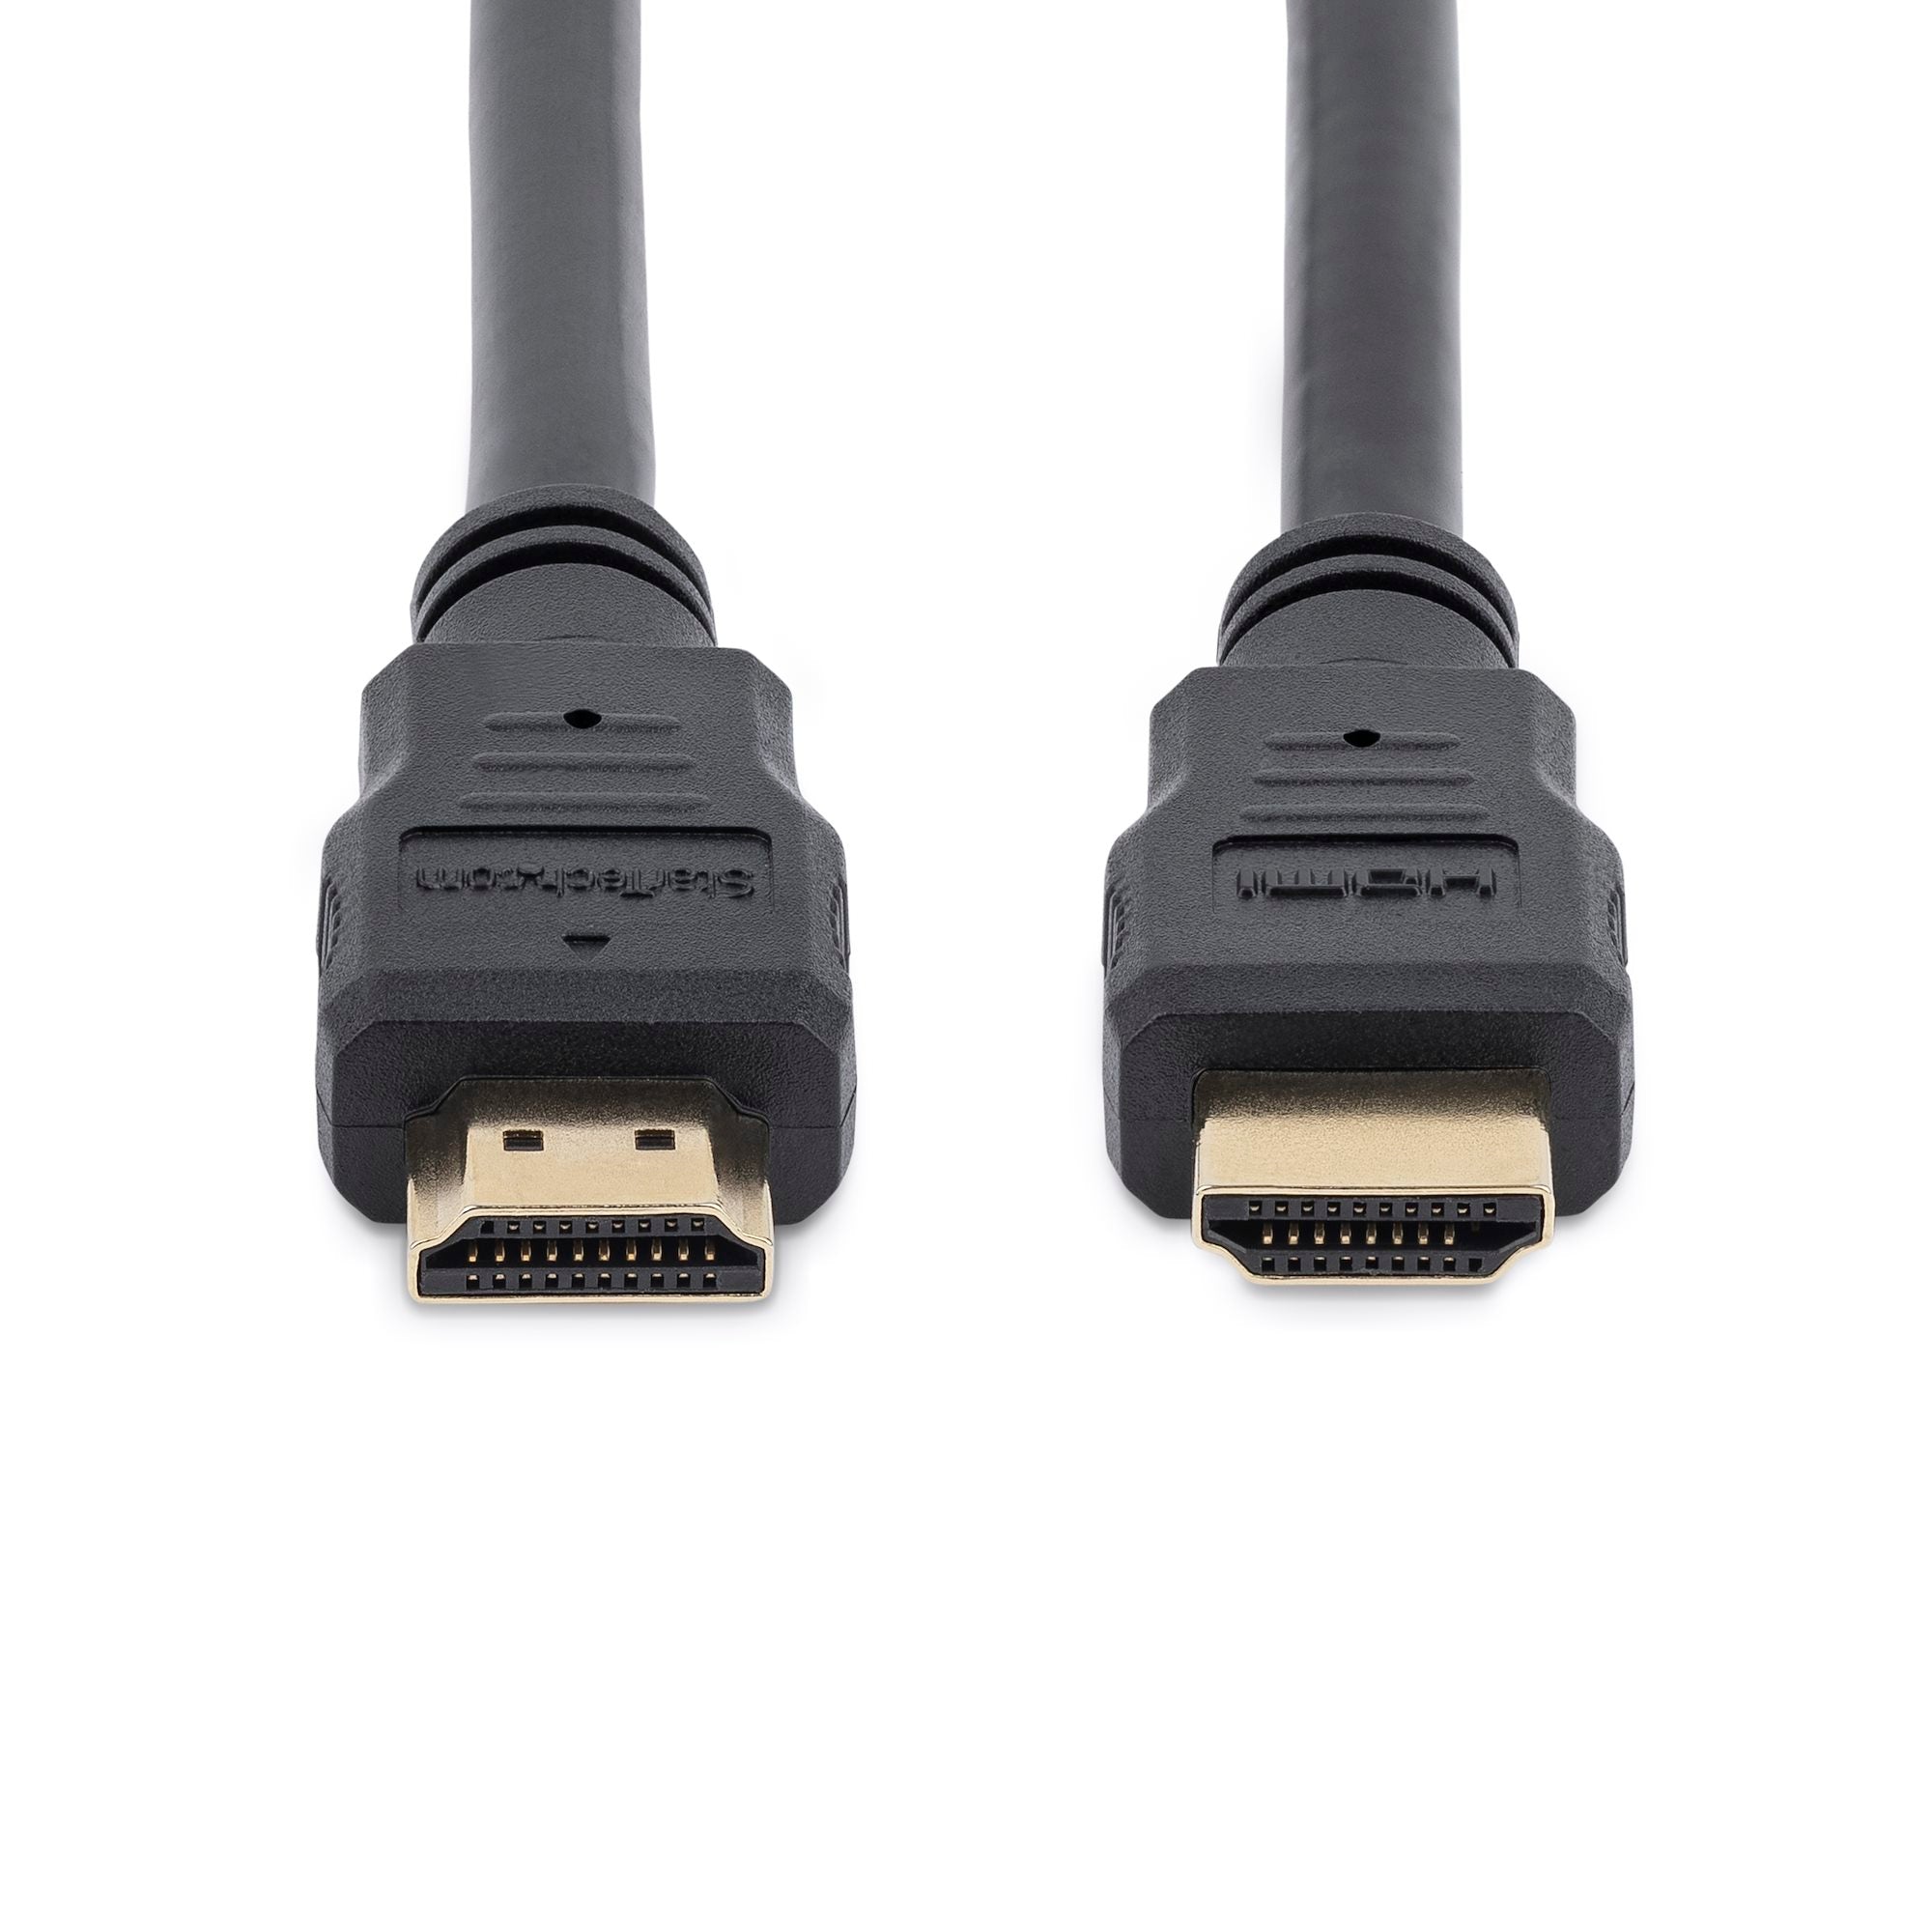 HDMI cable 30m